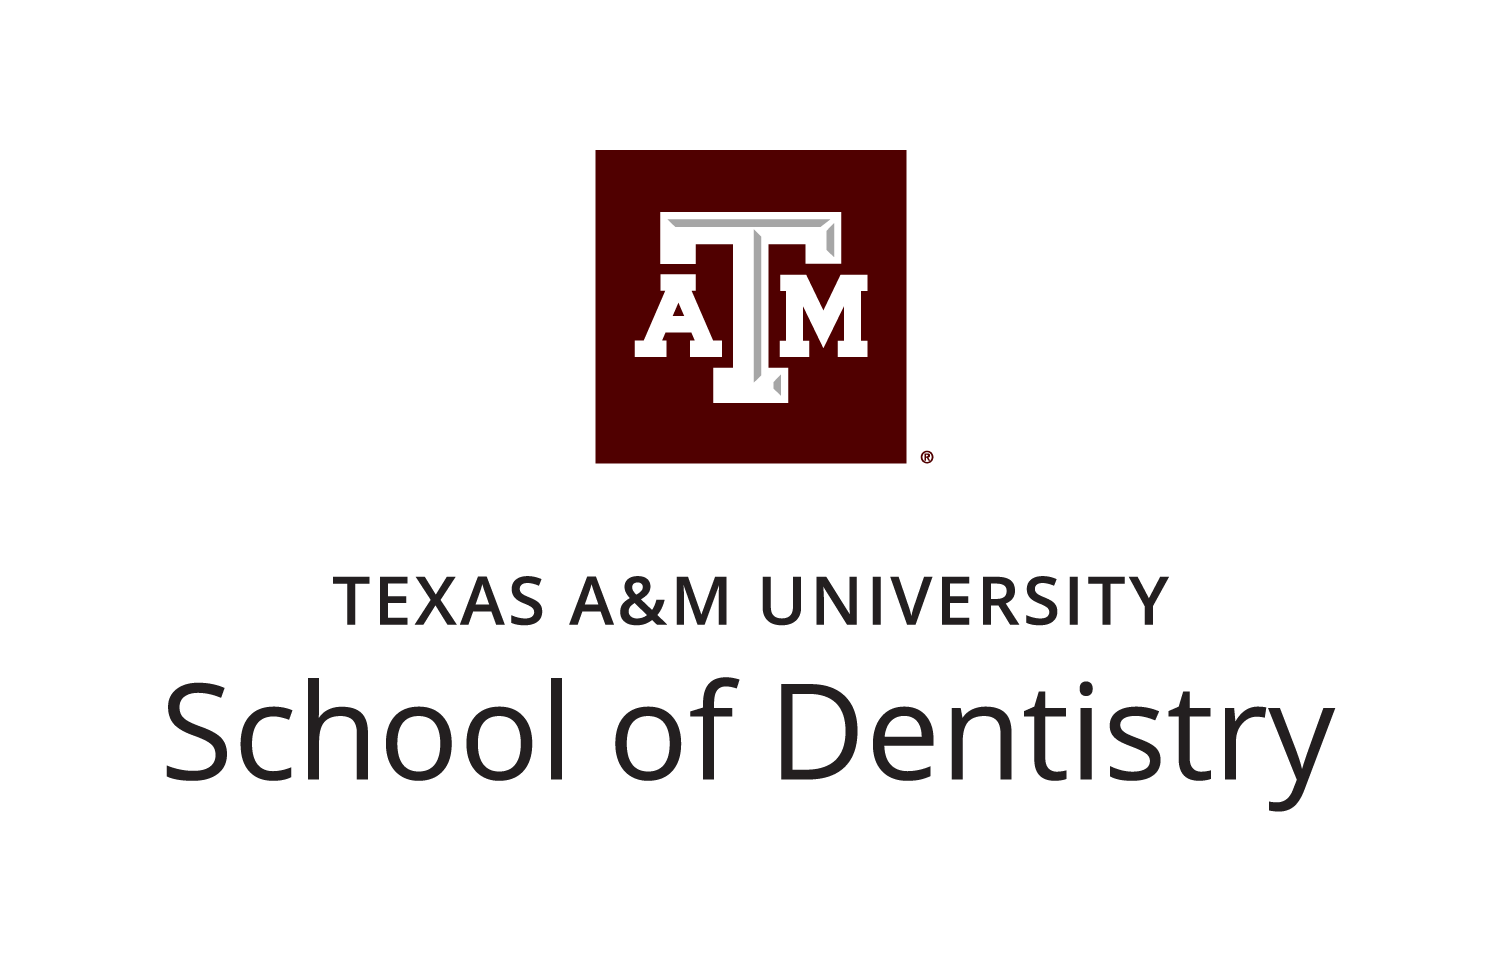 Texas A&M University School of Dentistry logo